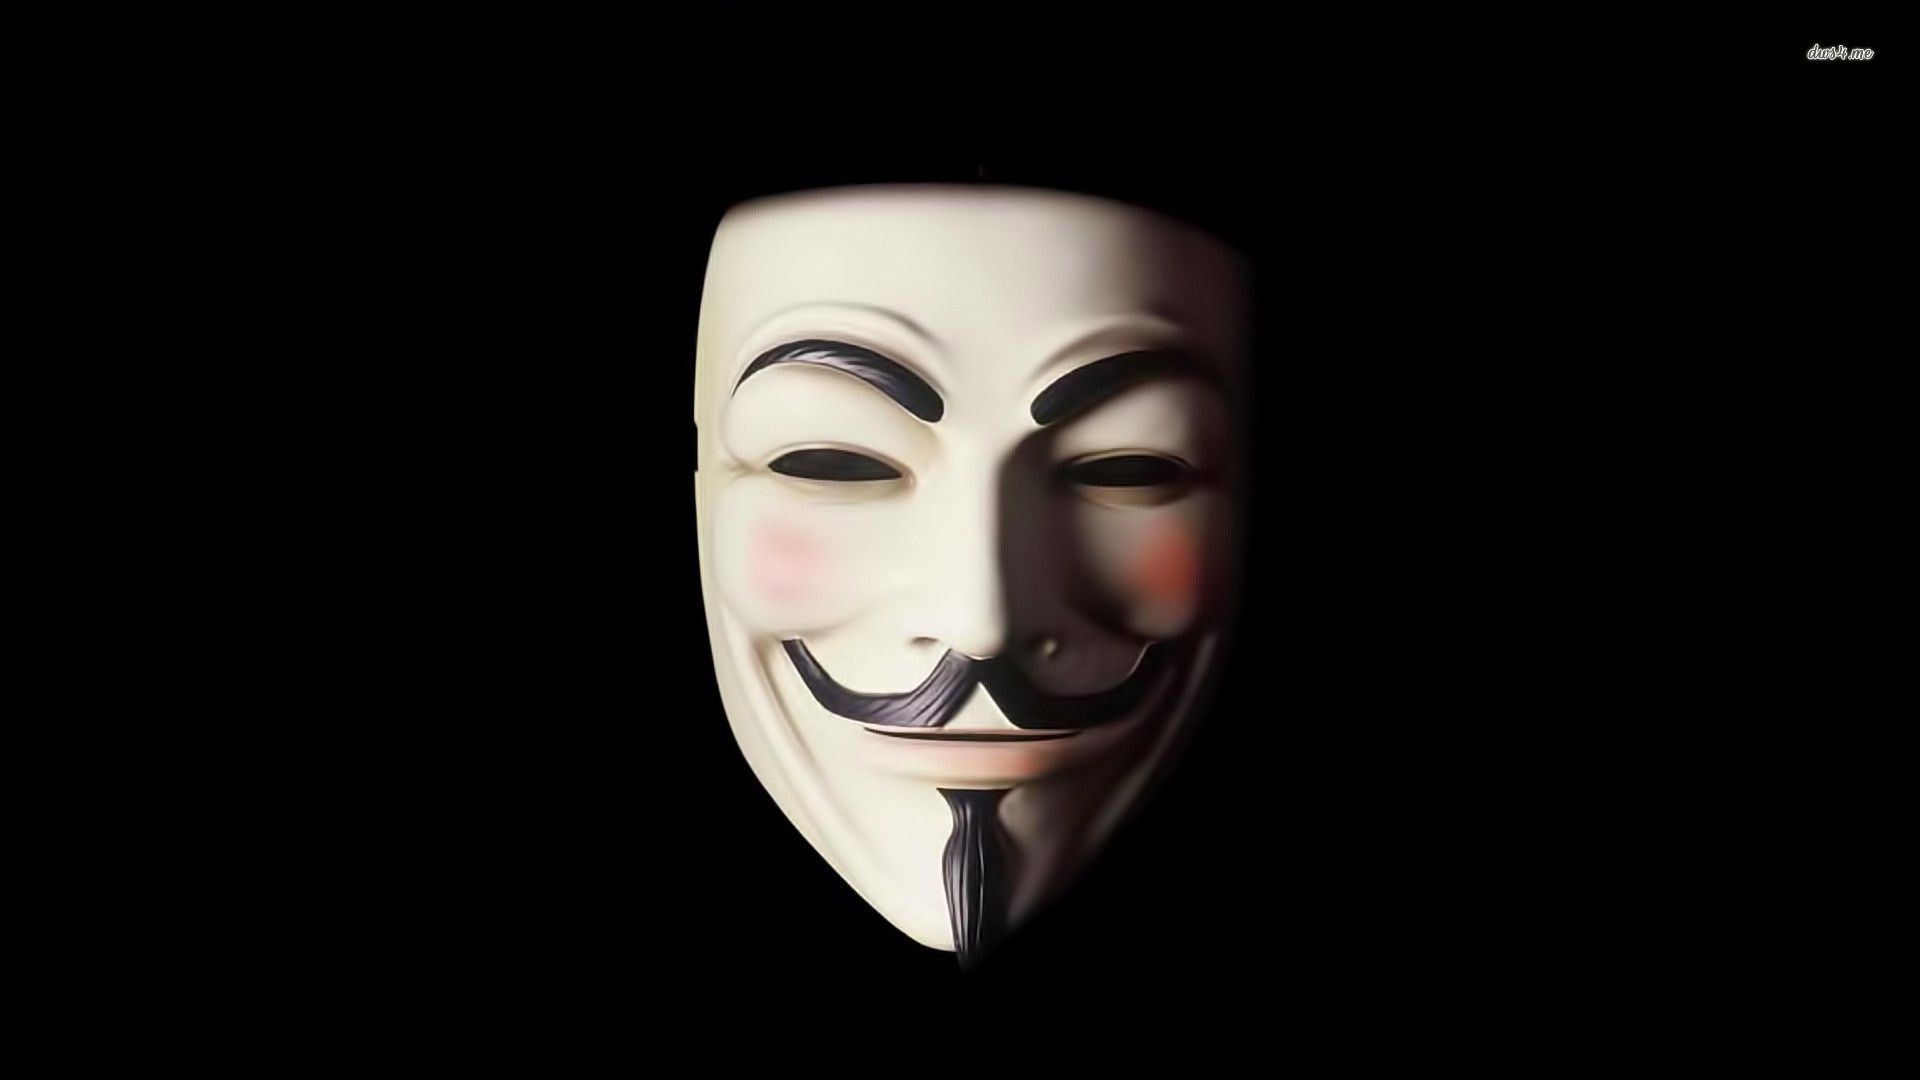 Anonymous Mask - wallpaper.